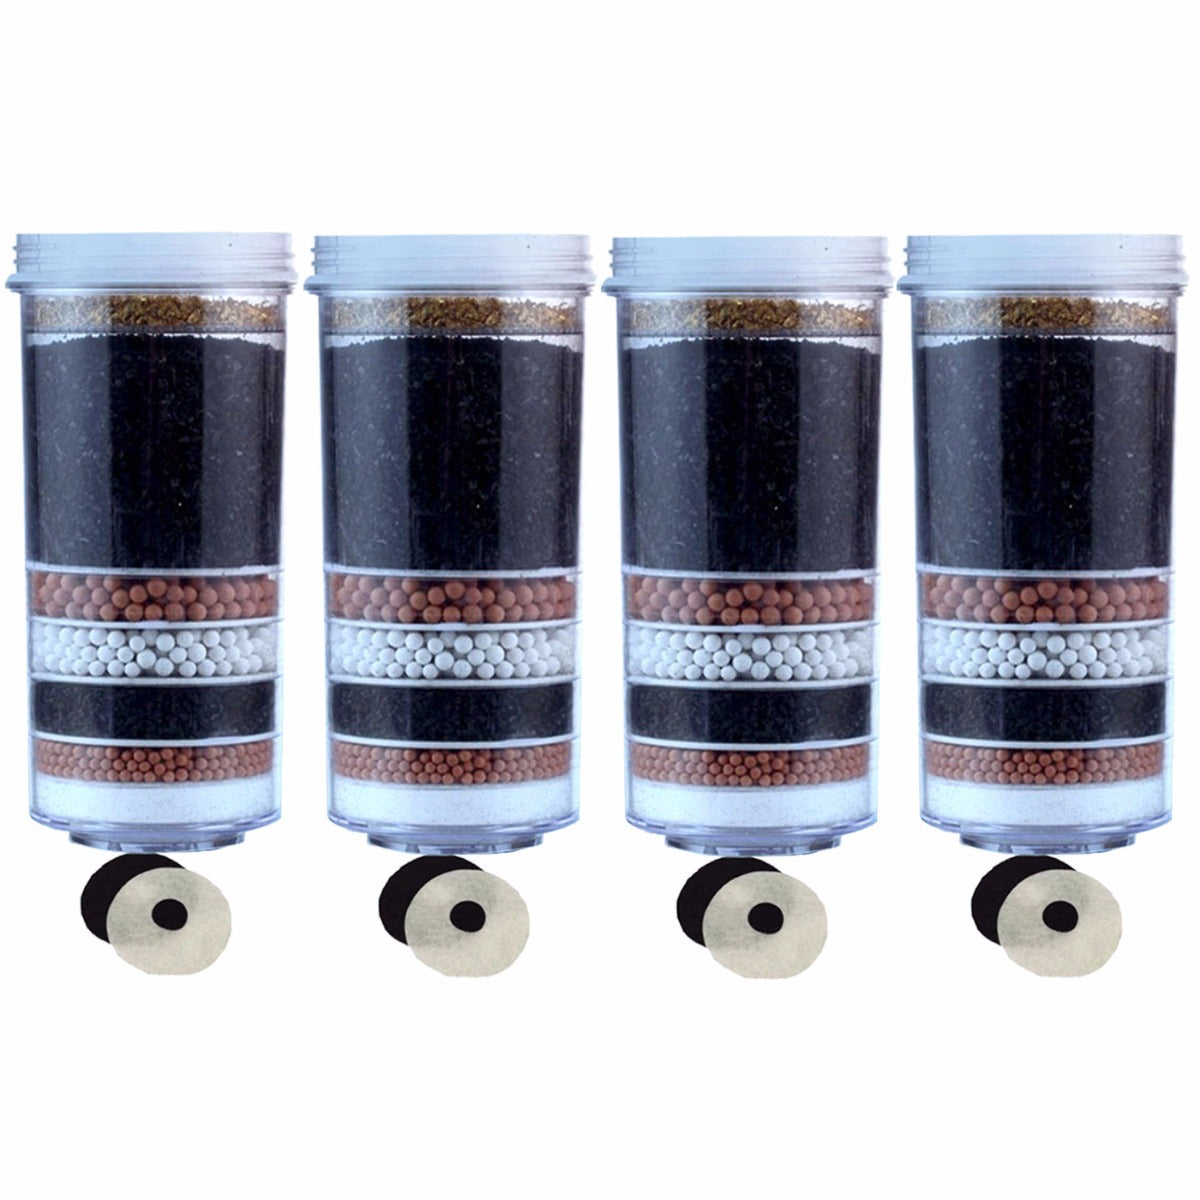 Aimex 8 Stage Water Filter Cartridges x 4 - BPA Free